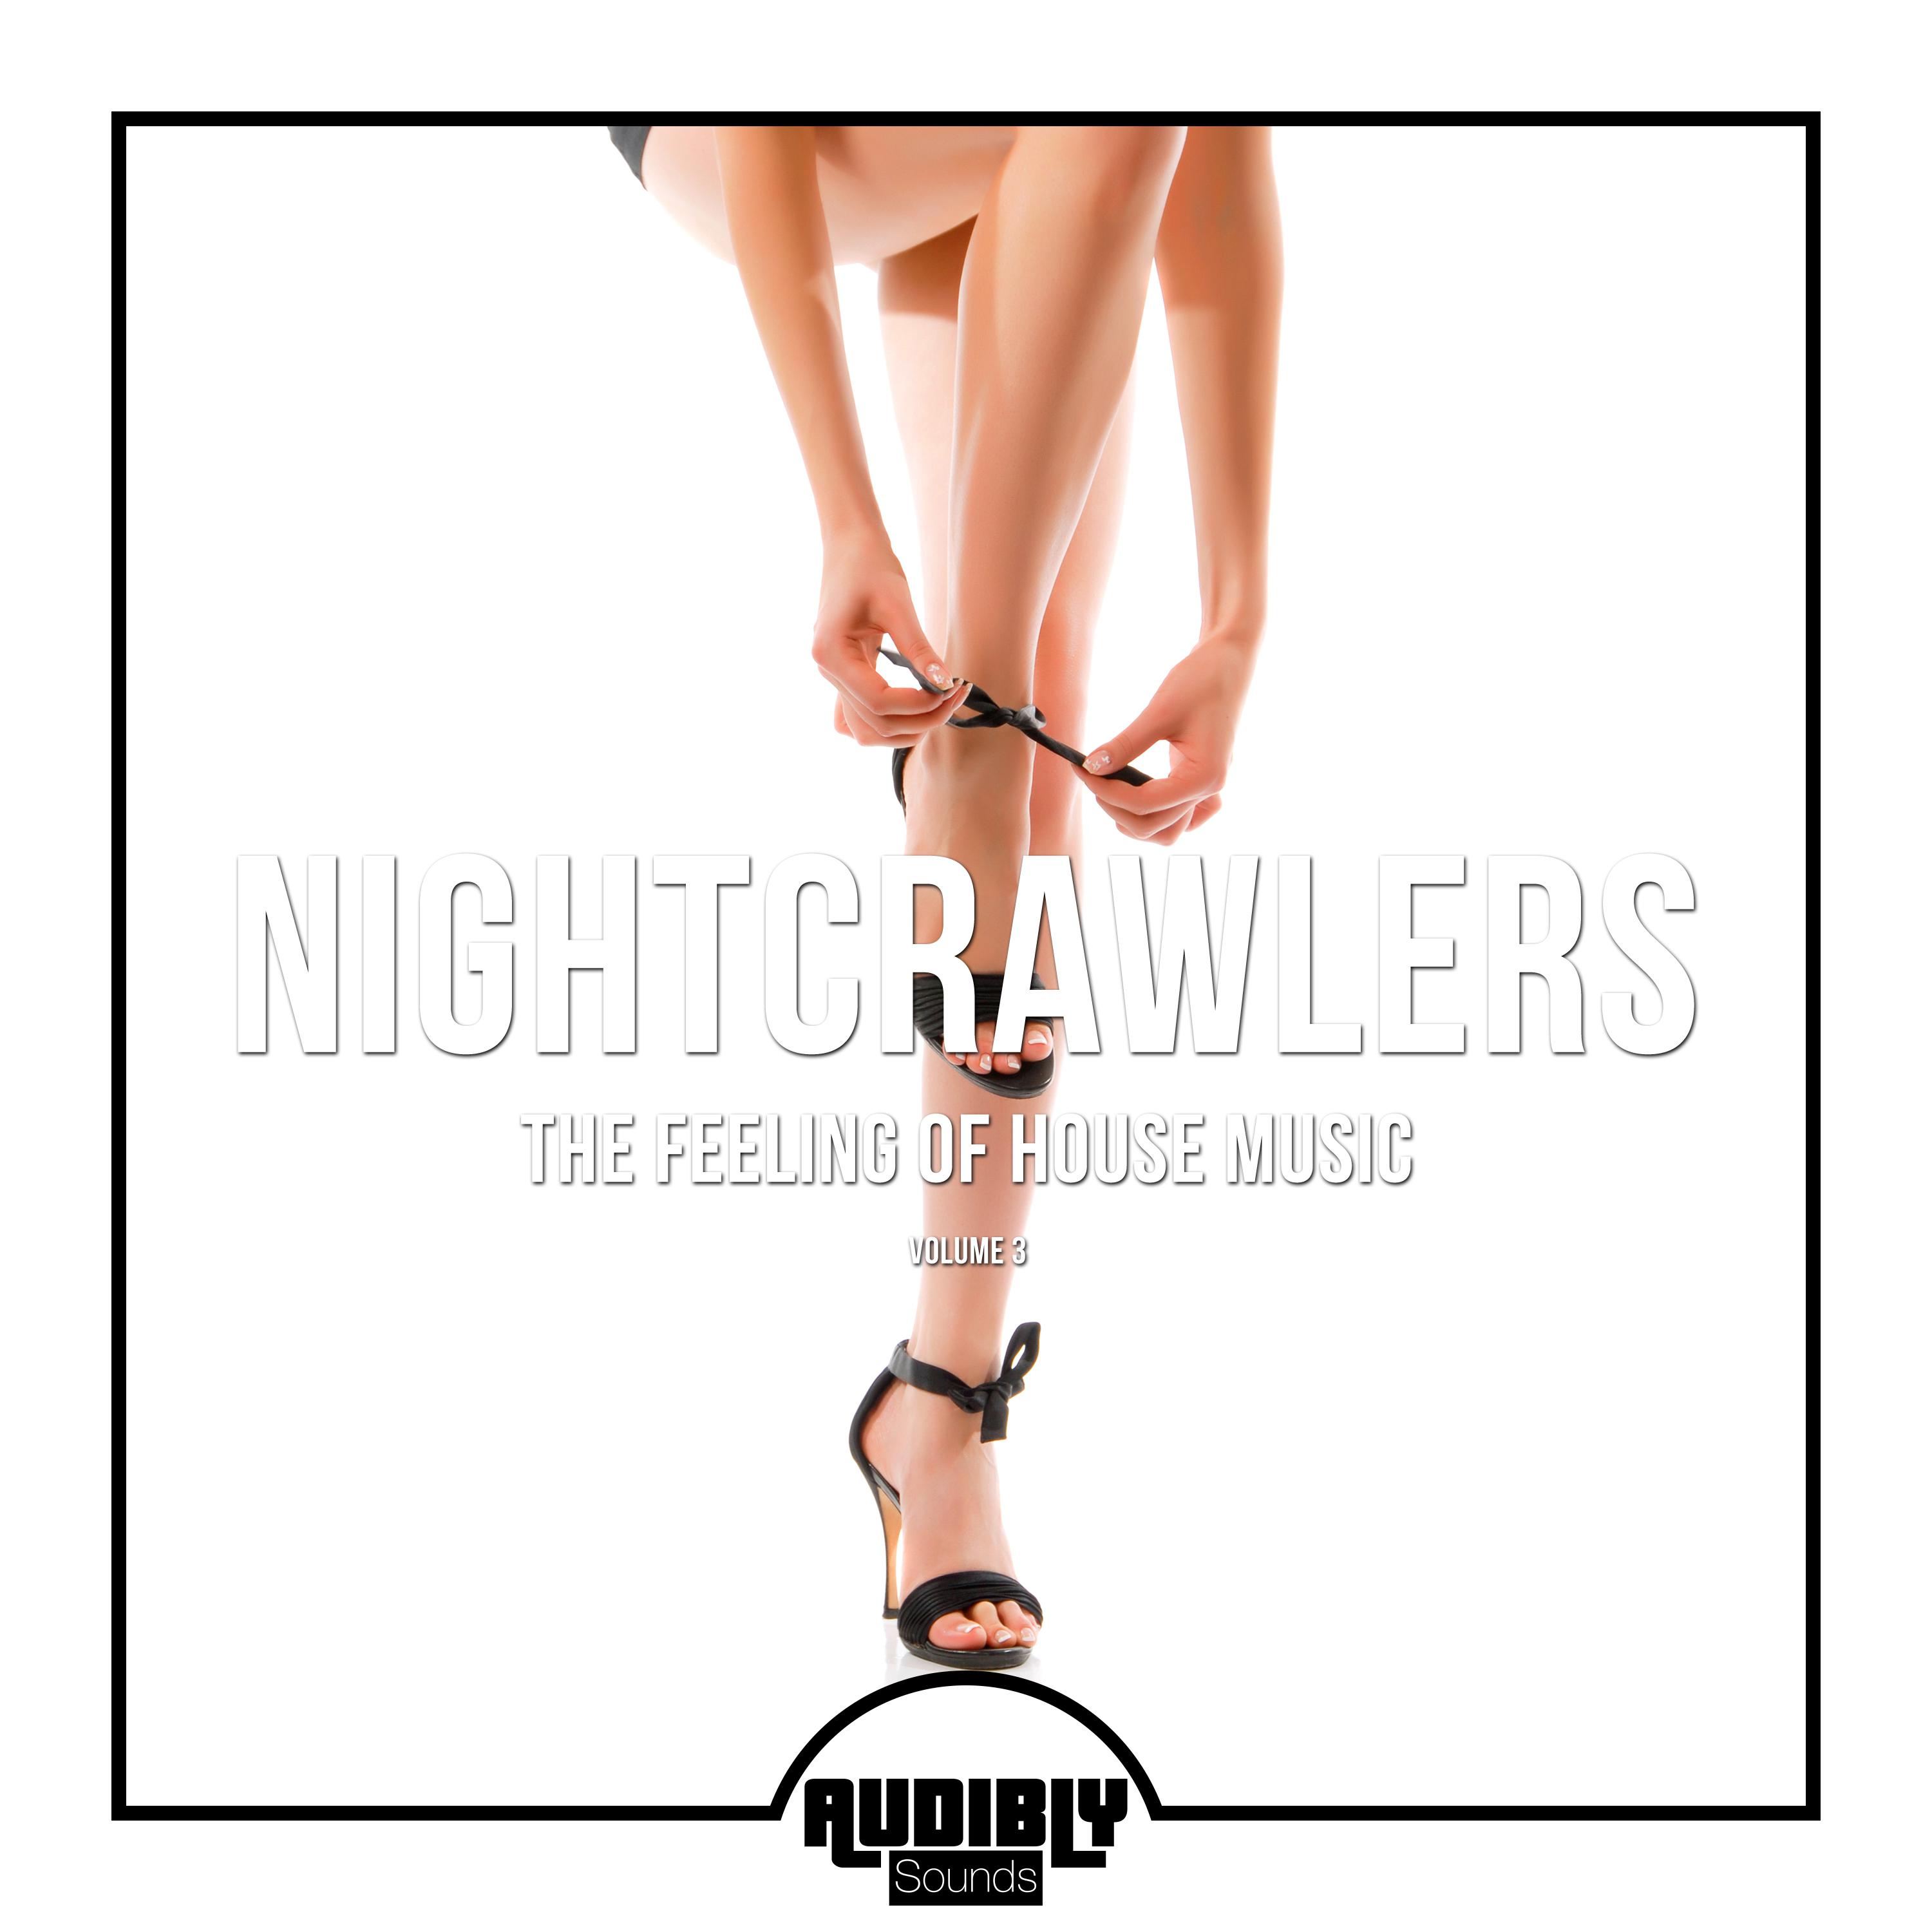 Nightcrawlers - The Feeling of House Music, Vol. 3